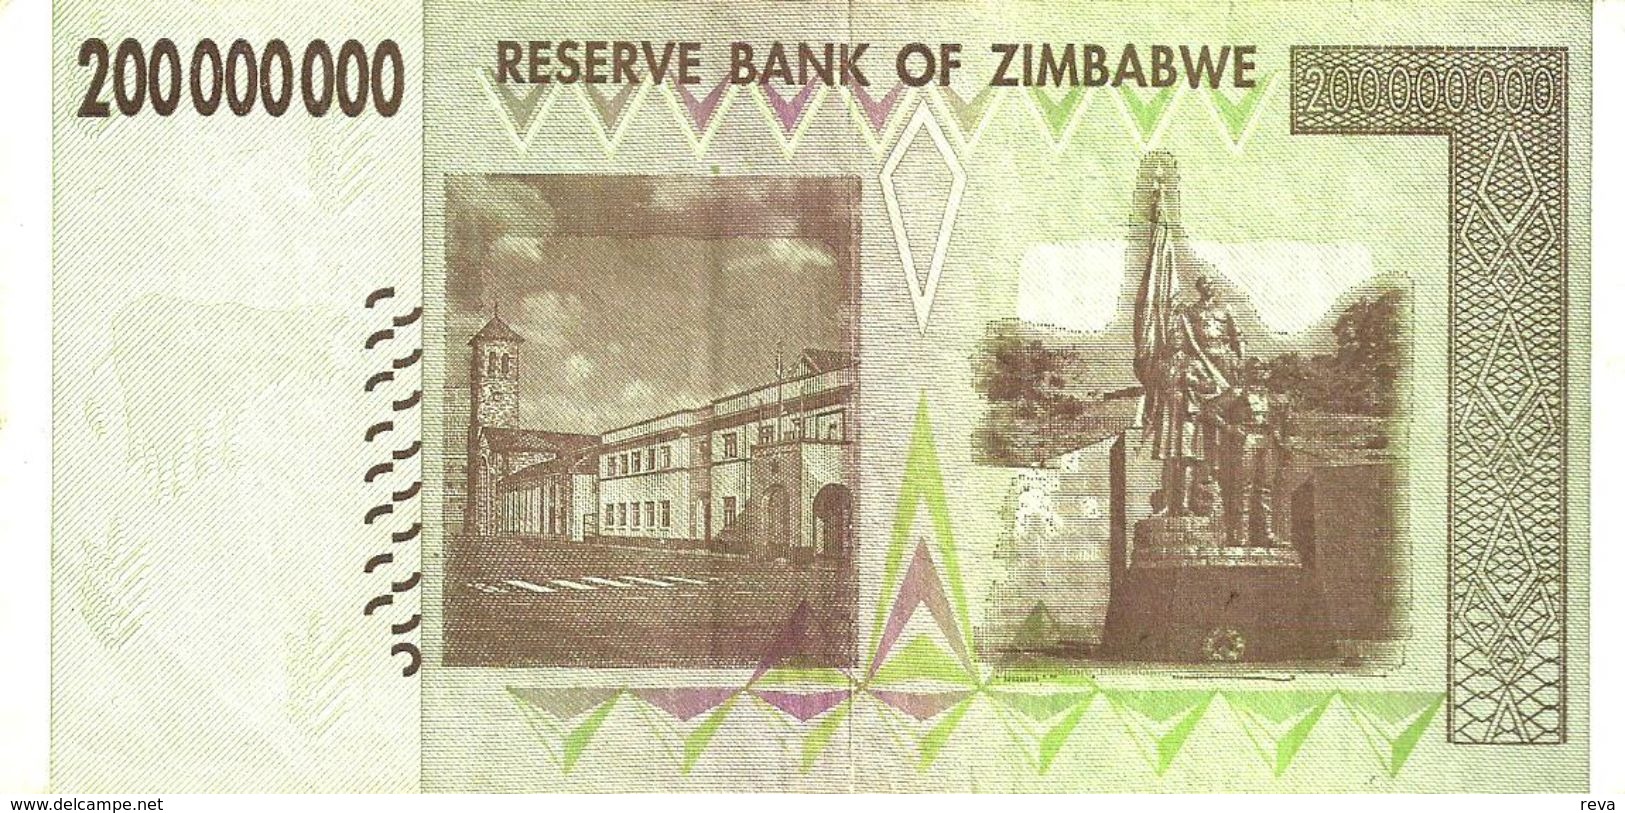 ZIMBABWE $200 MILLION BROWN ROCKS FRONT BUILDING BACK DATED 2008 VF READ DESCRIPTION CAREFULLY !!! - Zimbabwe